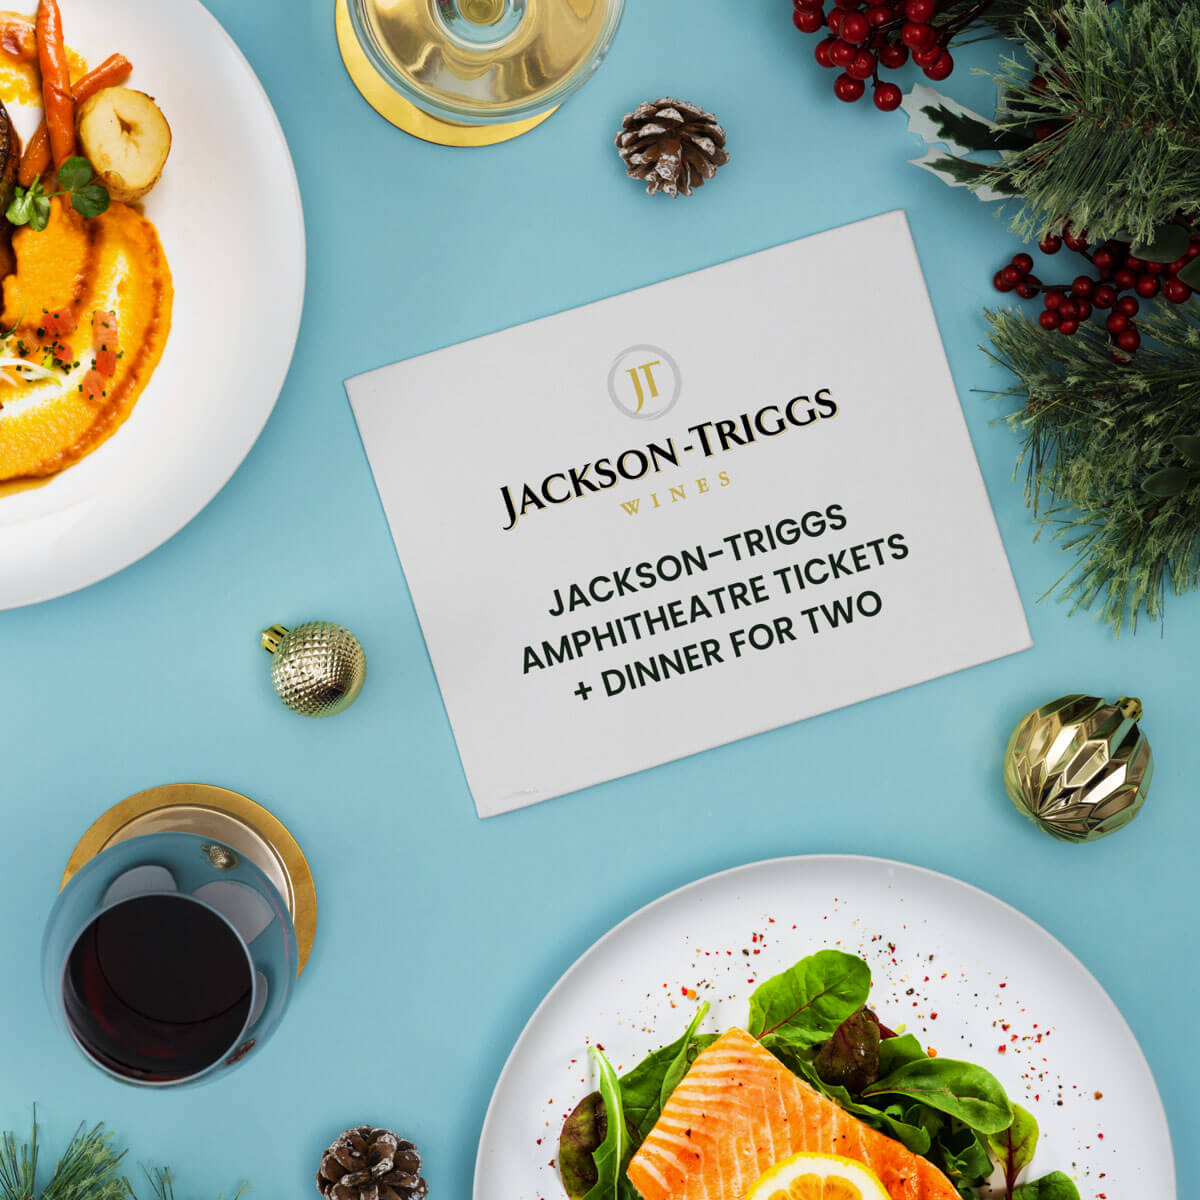 Jackson-Triggs Amphitheatre + Dinner